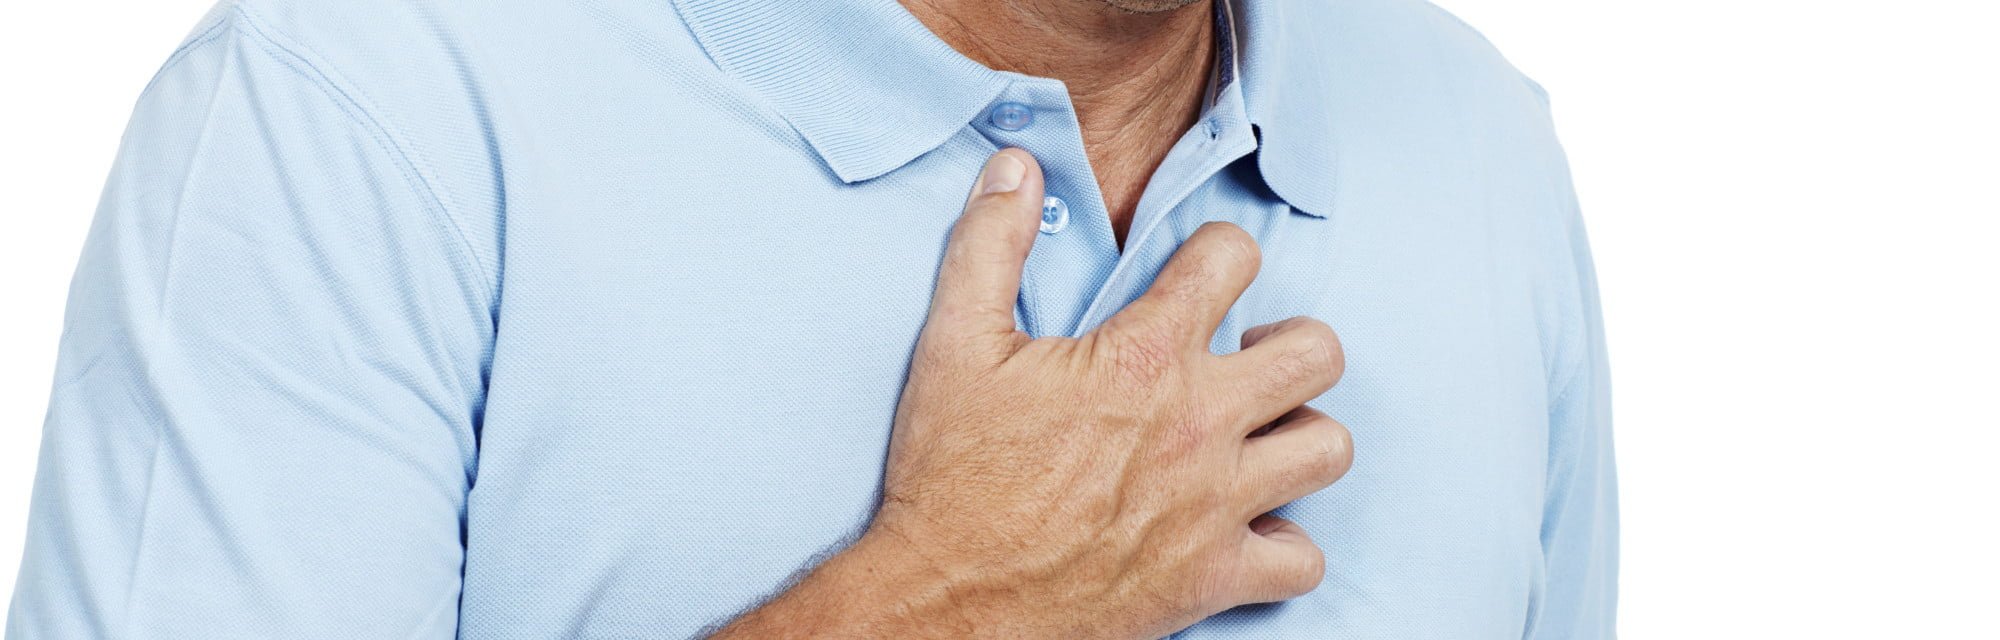 4 Things That Happen Before A Heart Attack E1409127598717 مجلة نقطة العلمية